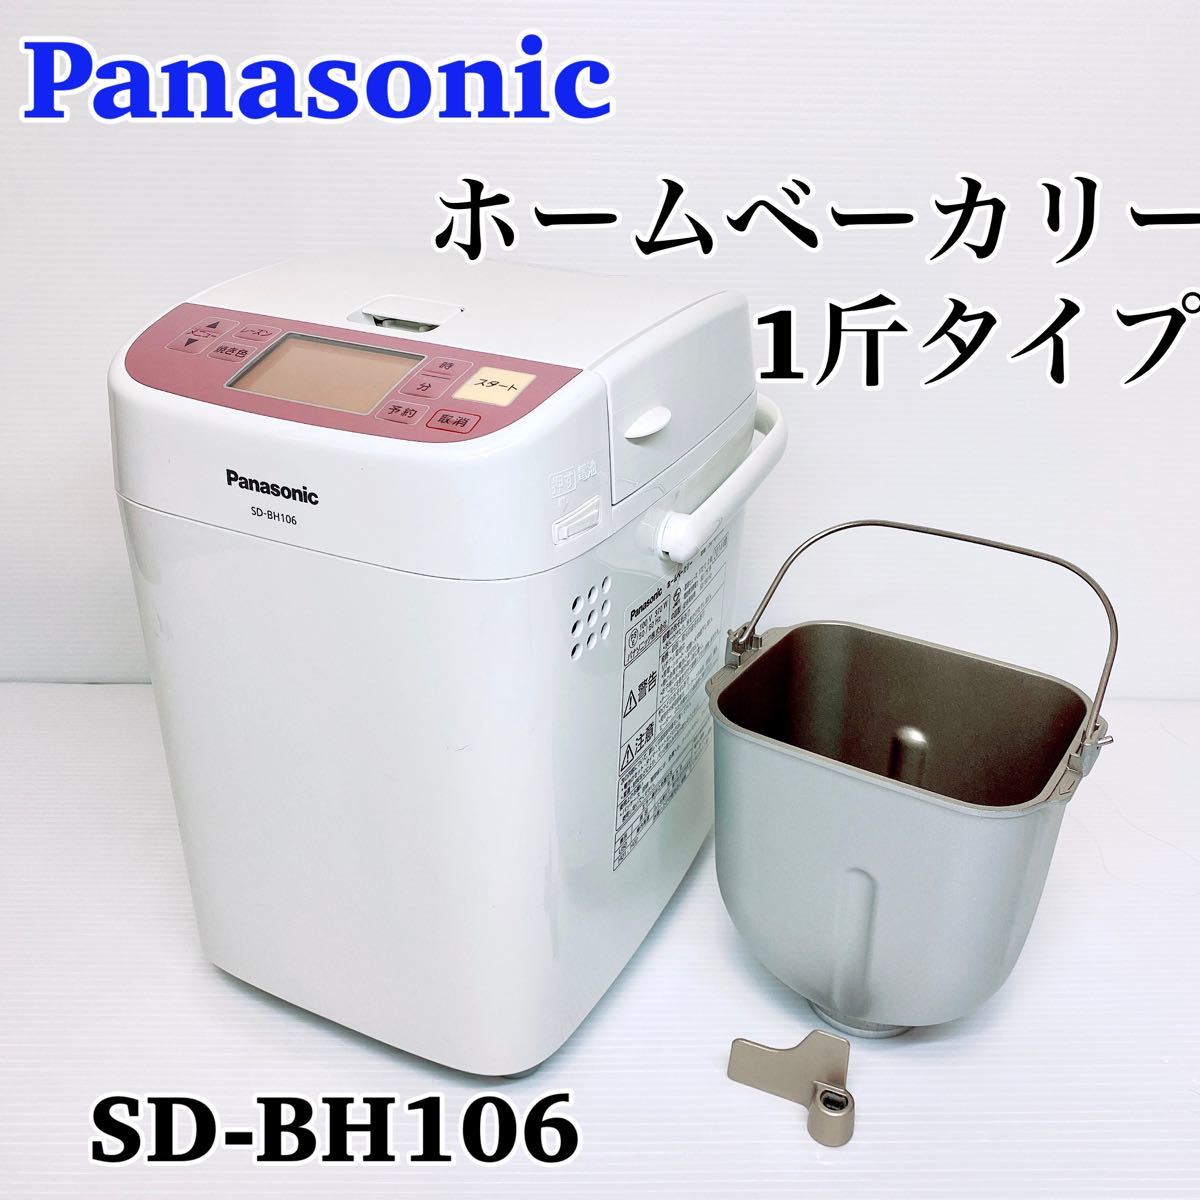 Panasonic パナソニック ホームベーカリー 1斤タイプ ピンクホワイト SD-BH106